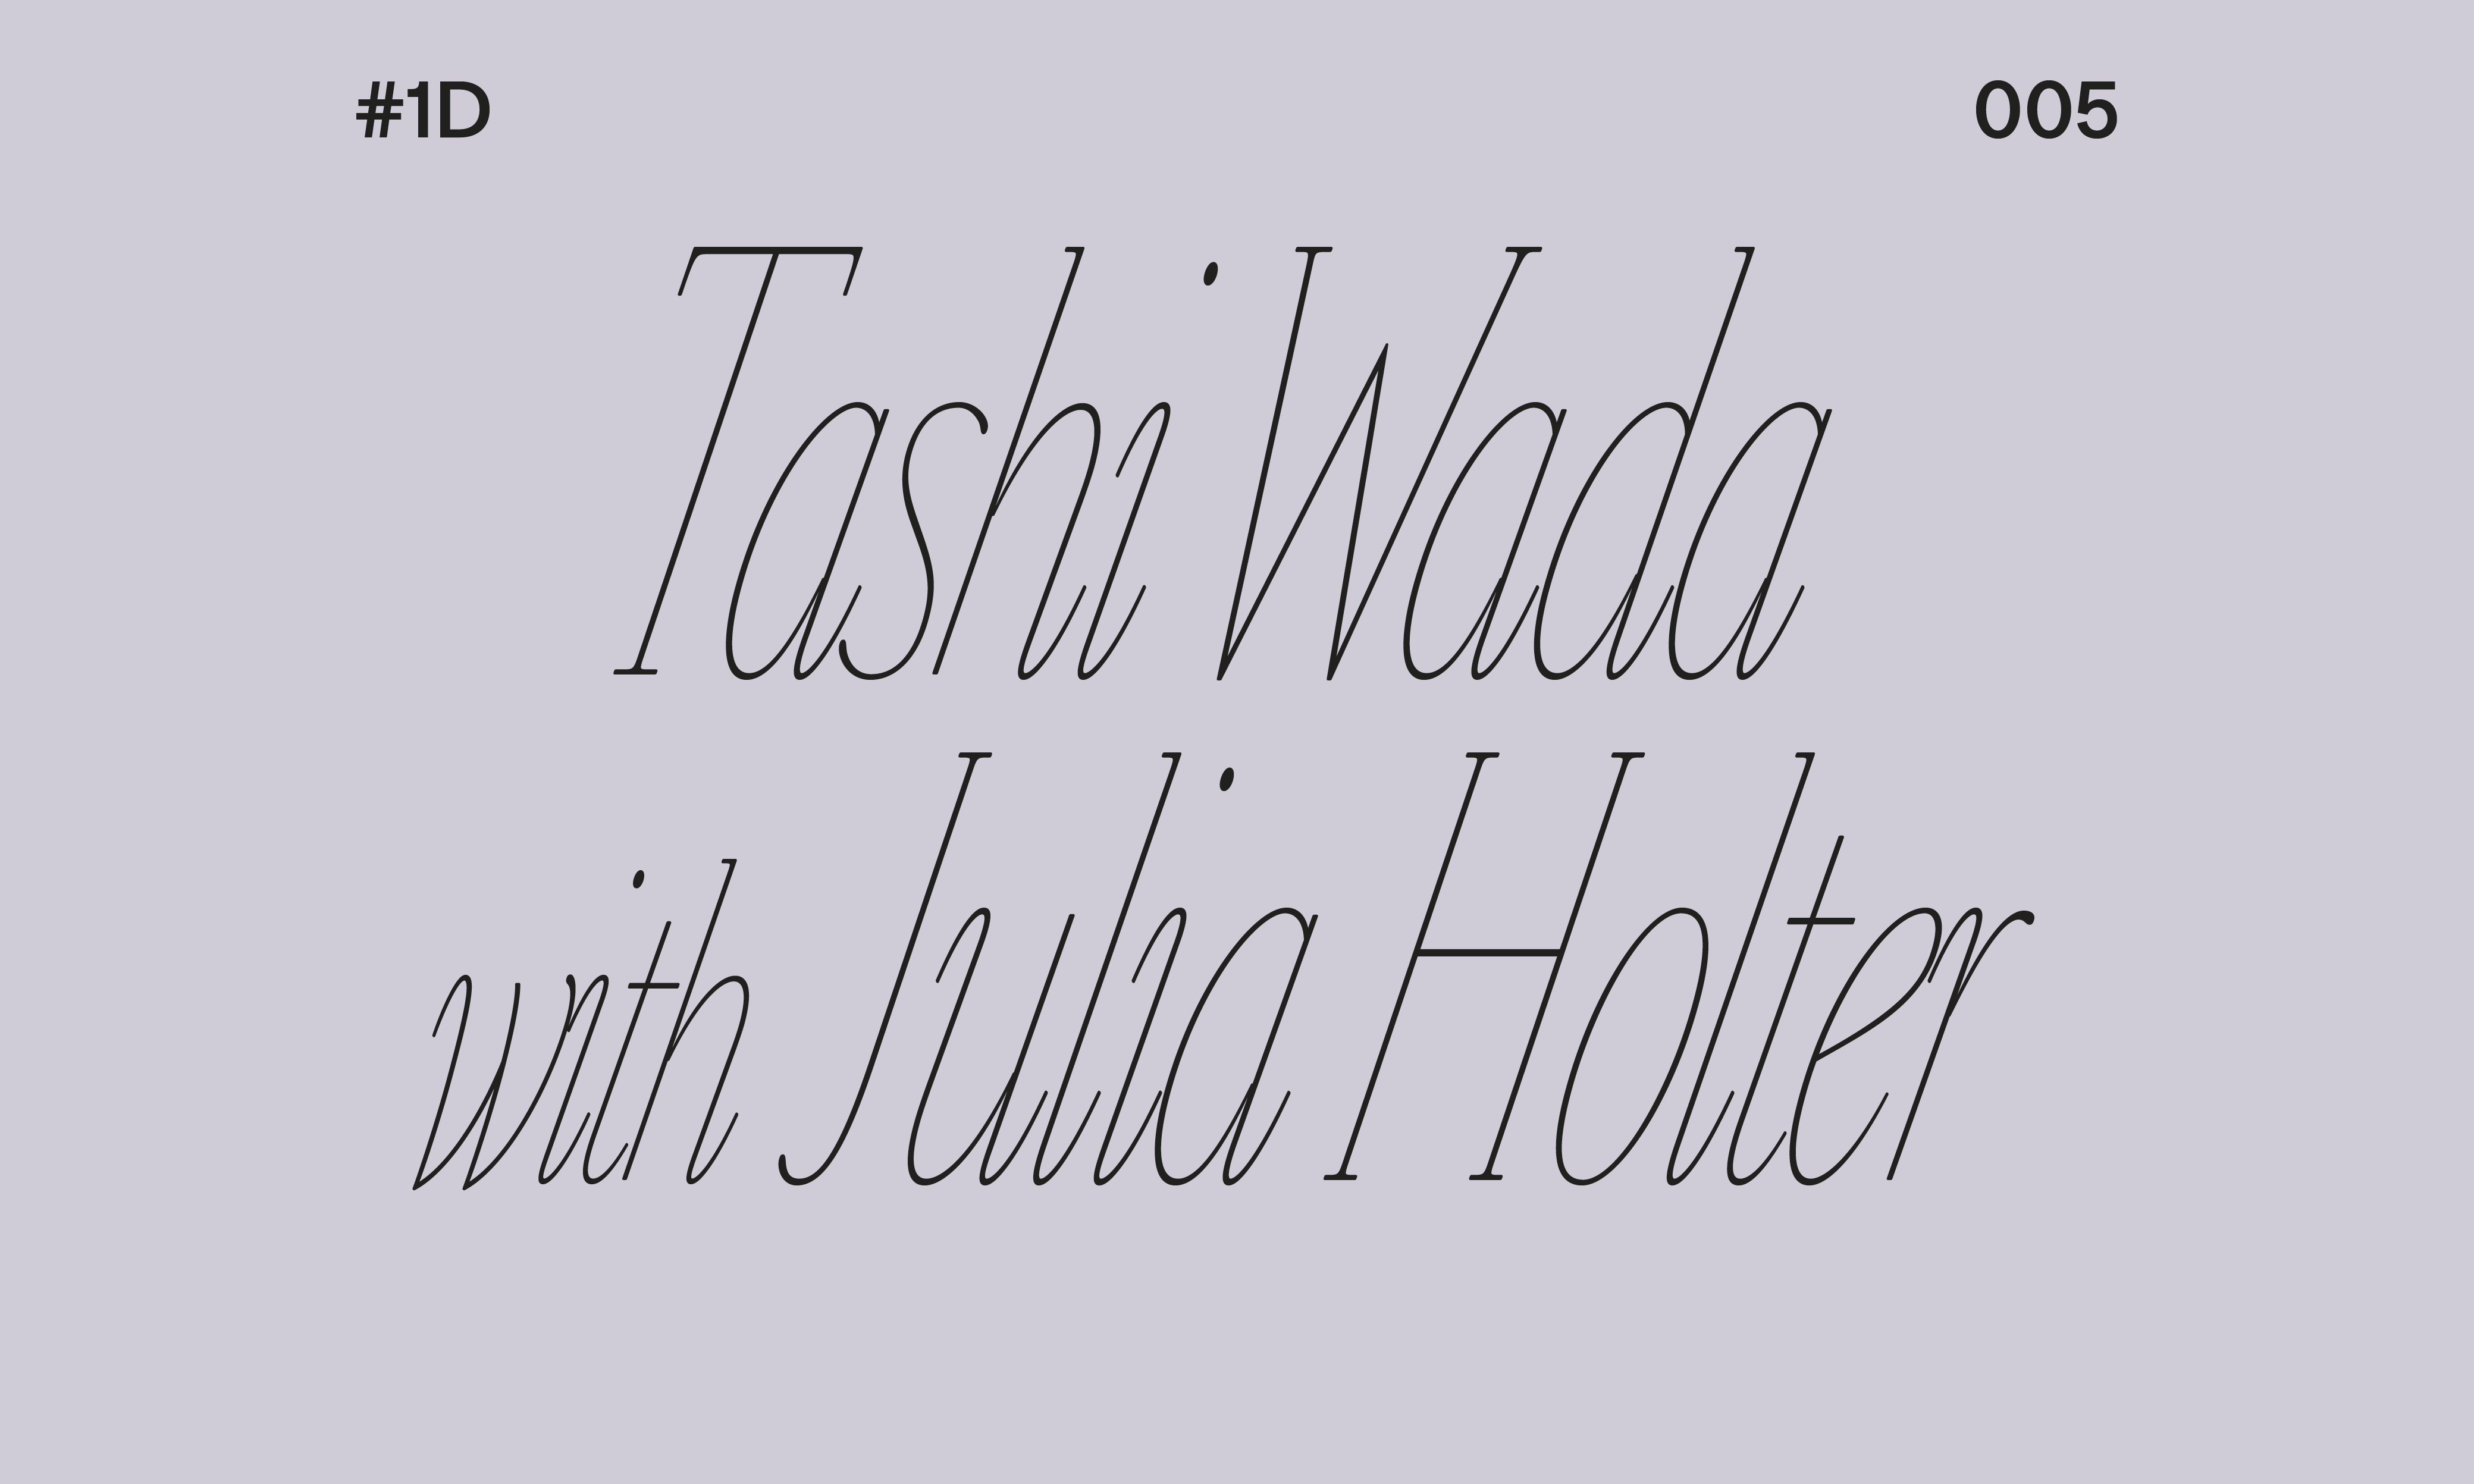 Tashi Wada with Julia Holter